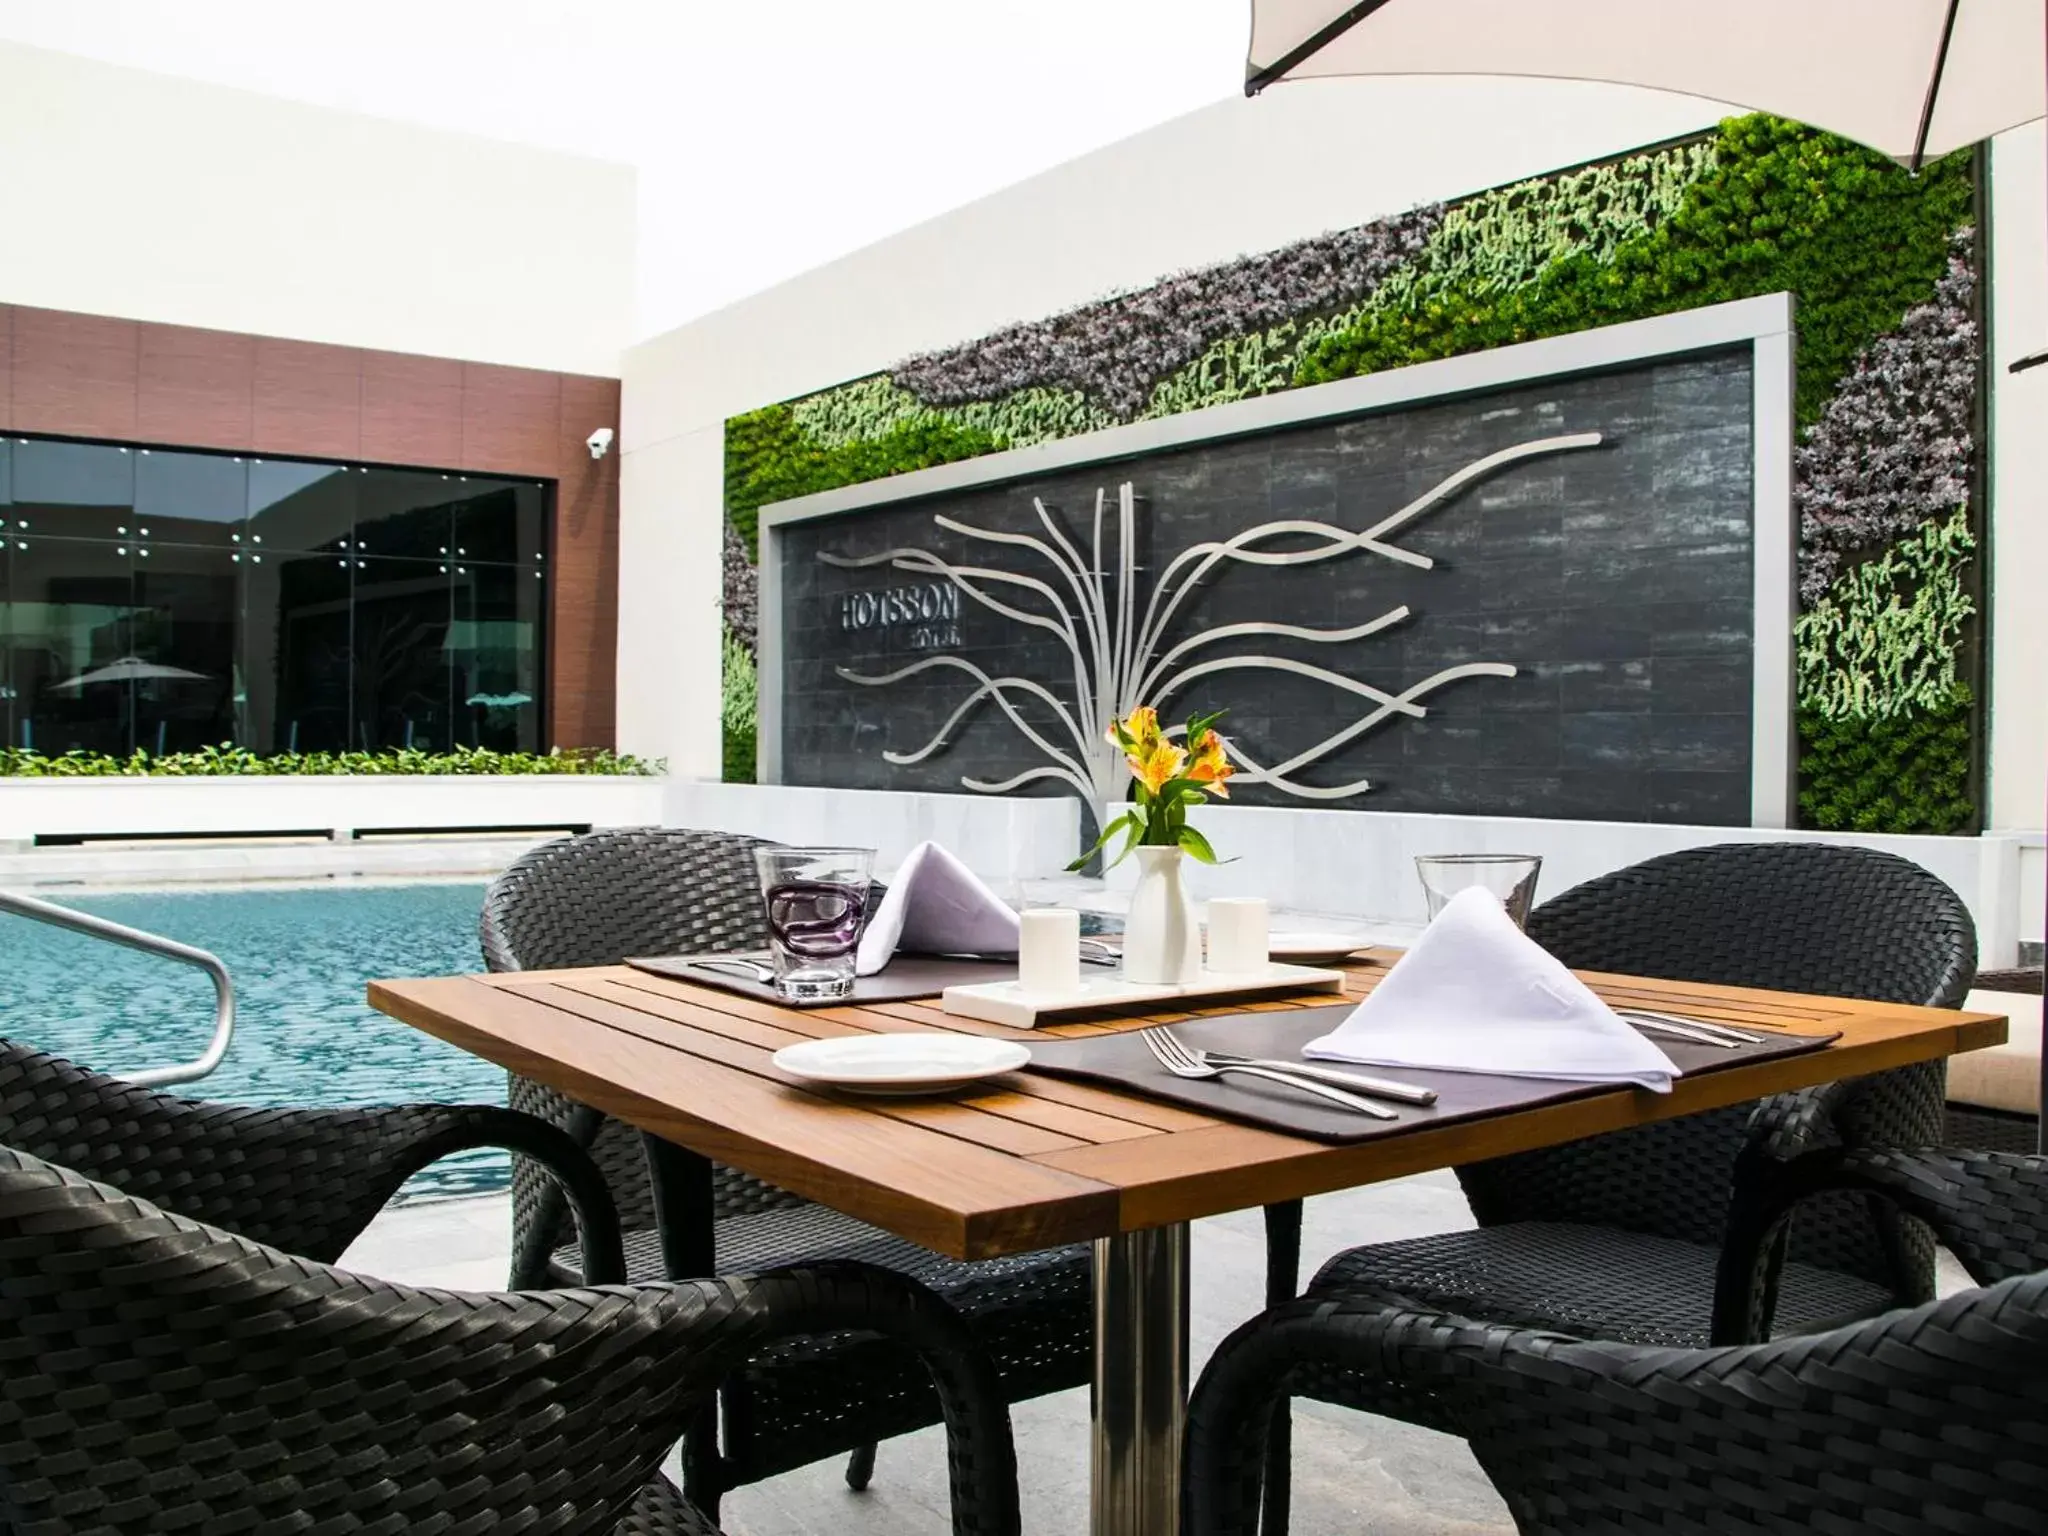 Swimming pool in HS HOTSSON Hotel Irapuato